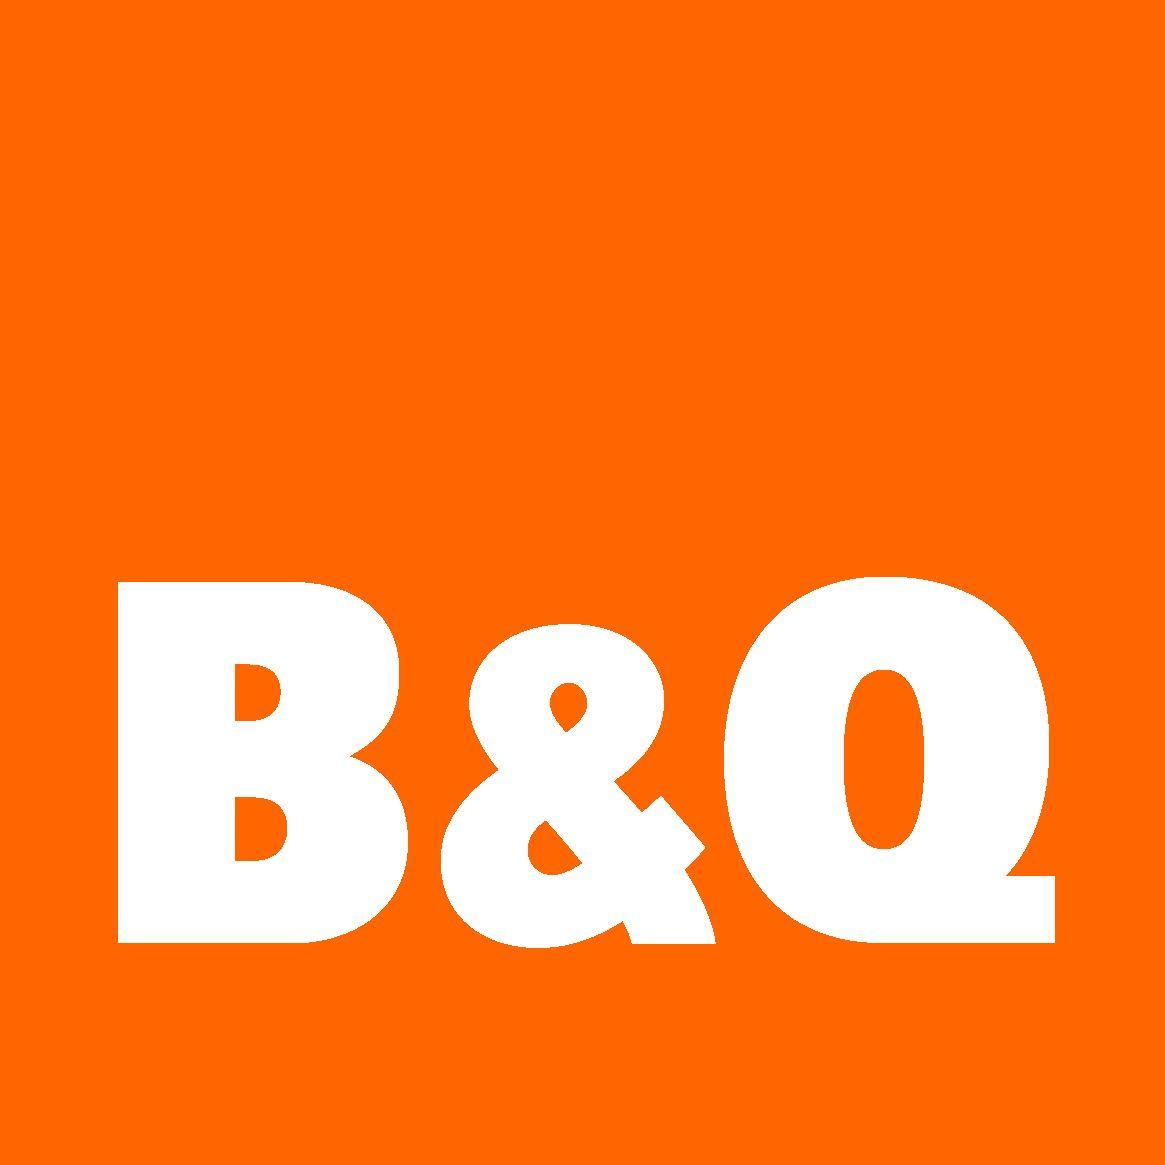 B& Q Logo - Kingfisher plc - Media - Image library - Logos